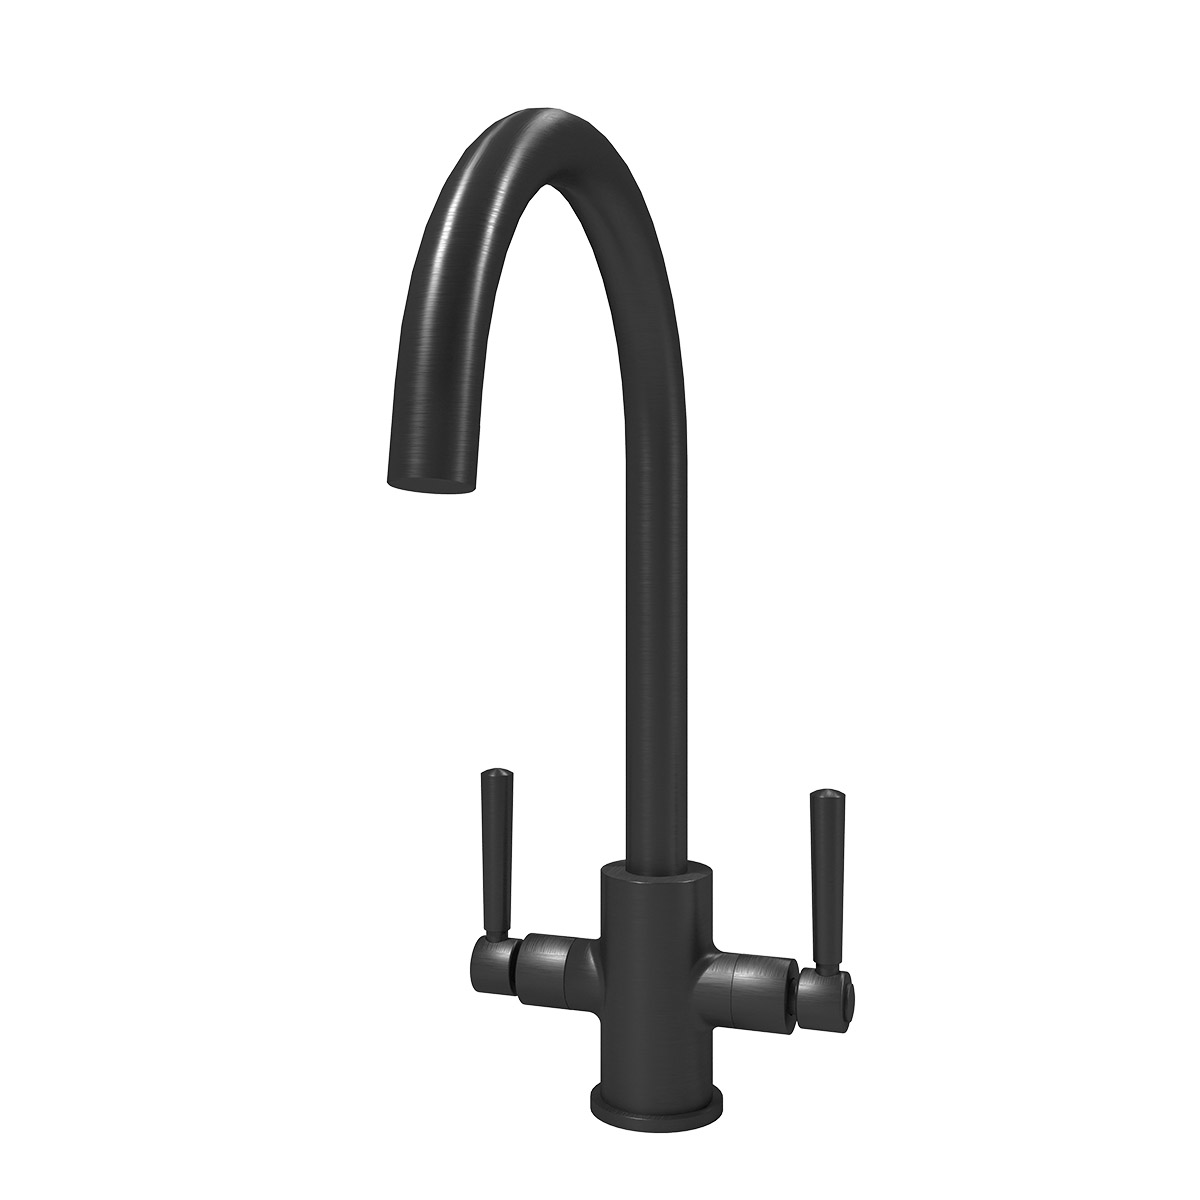 Noa dual lever kitchen tap in black